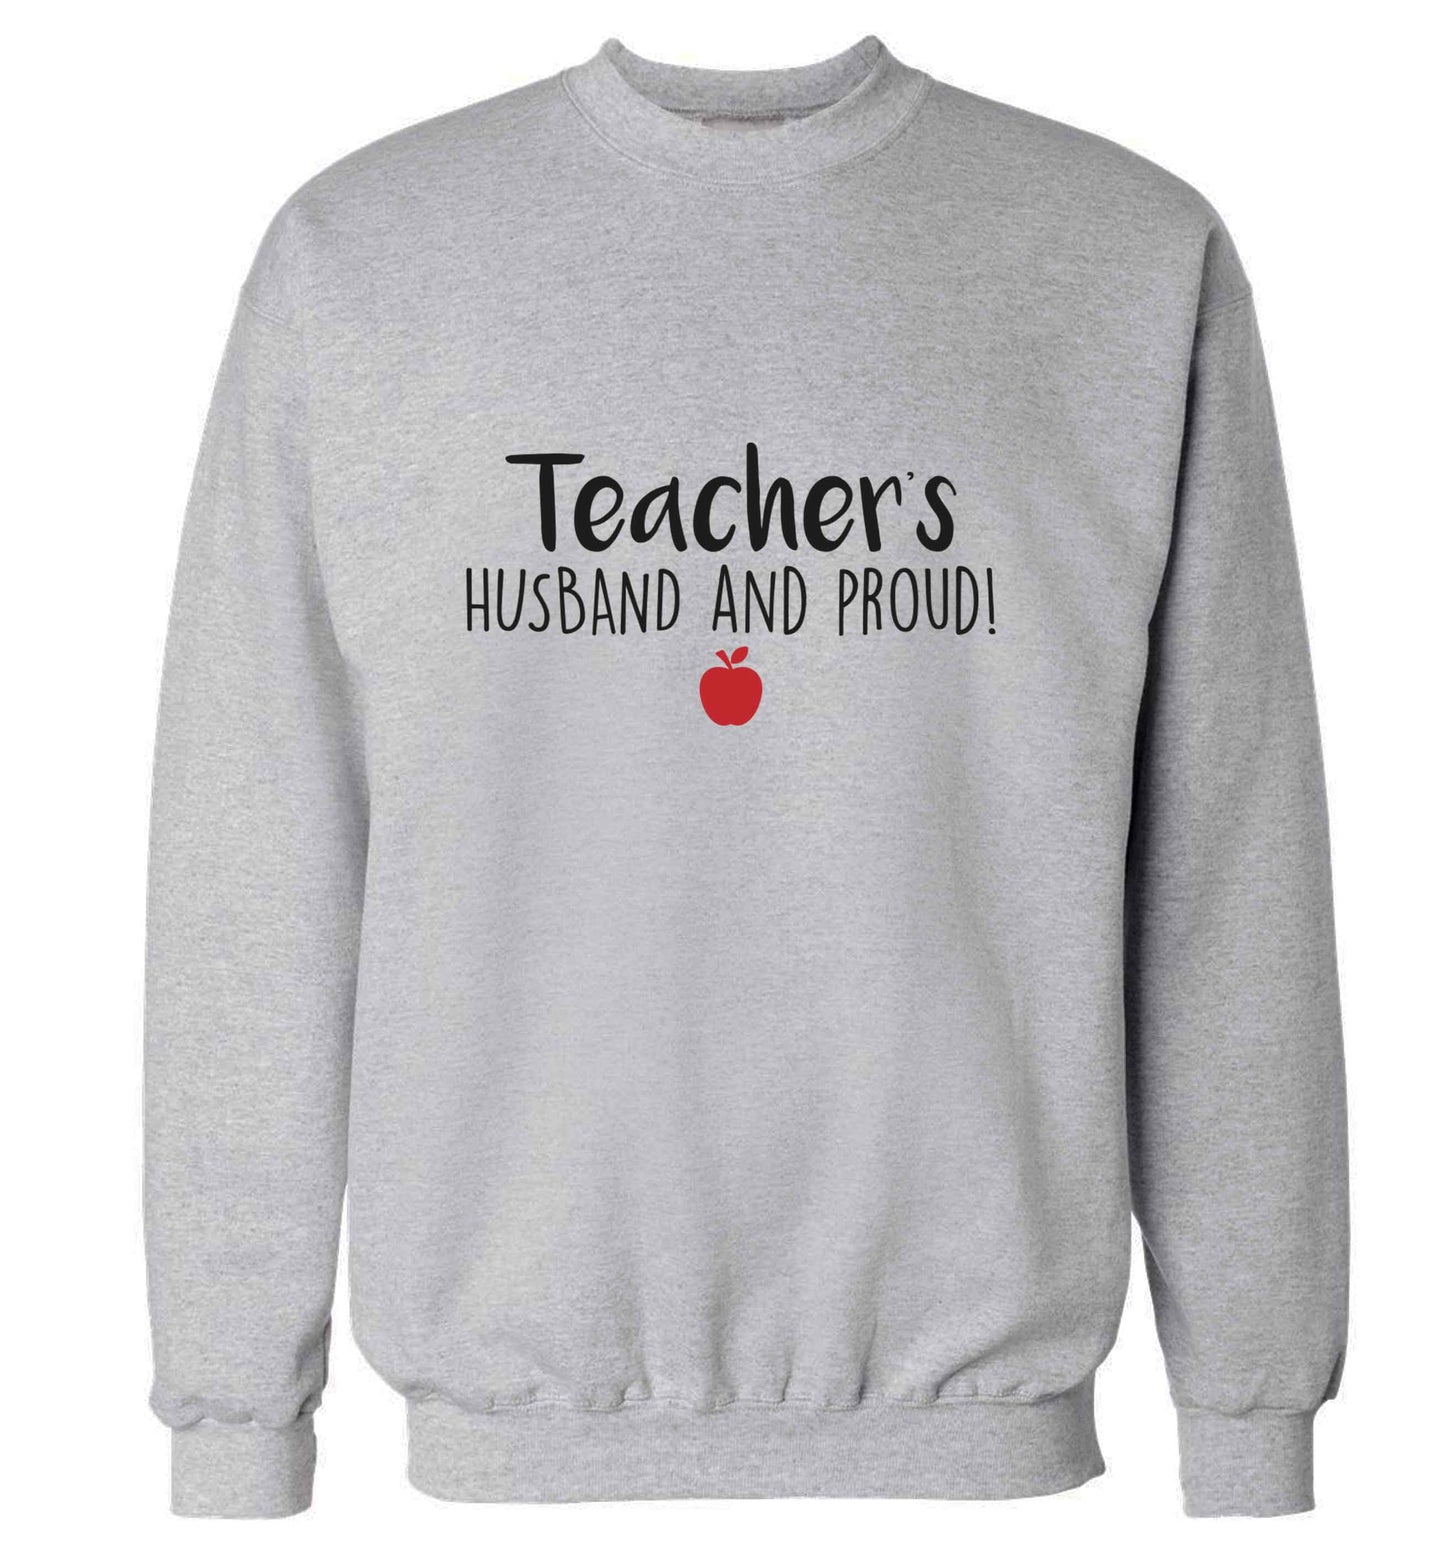 Teachers husband and proud adult's unisex grey sweater 2XL